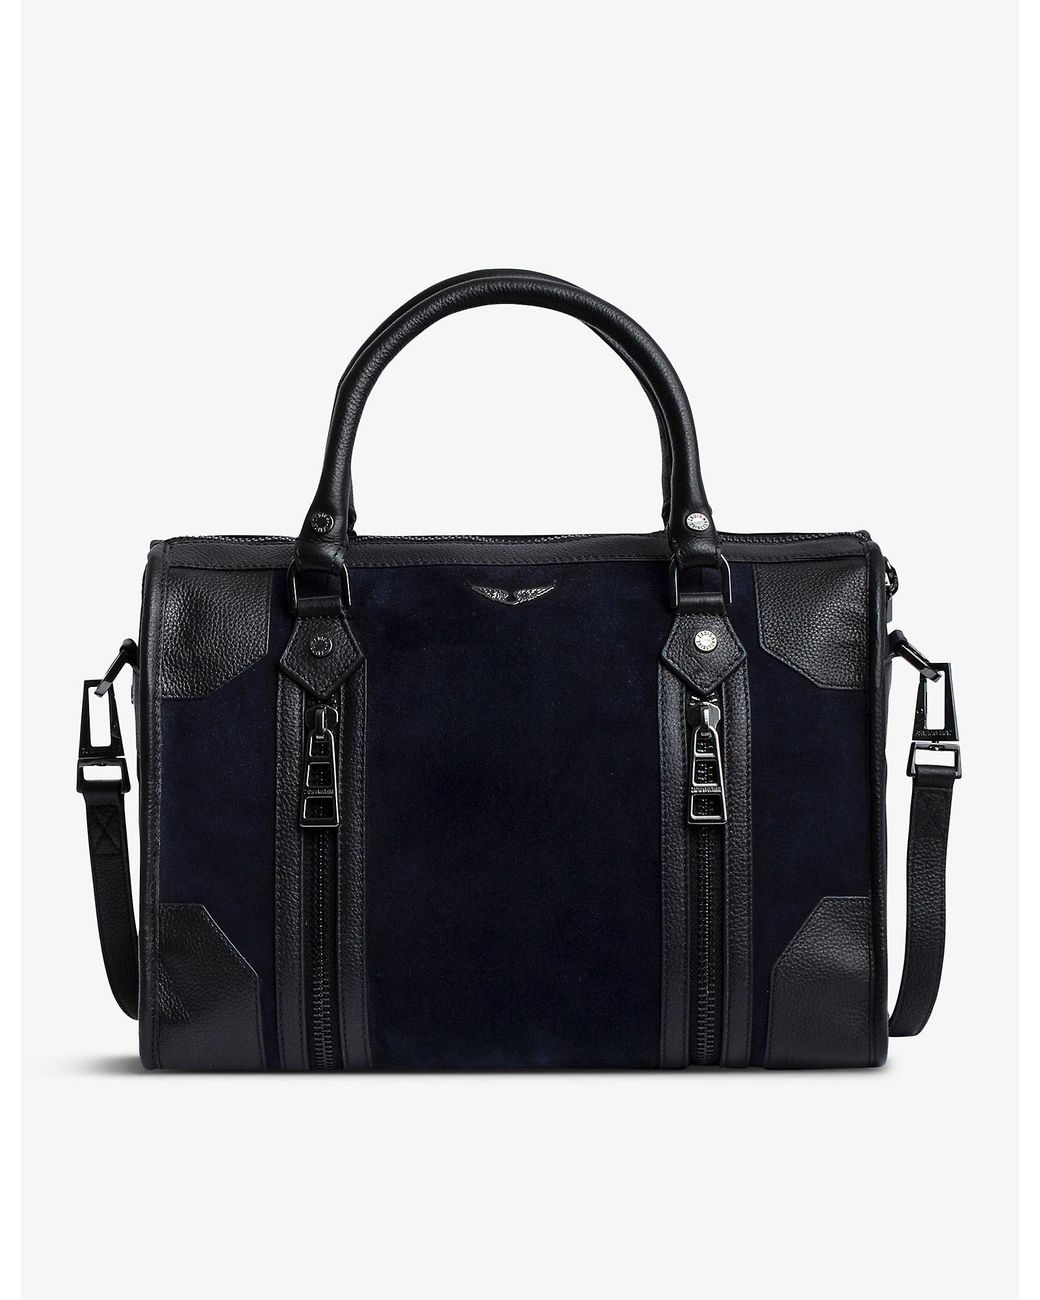 Zadig & Voltaire Sunny Medium Suede Leather Shoulder Bag in Blue | Lyst